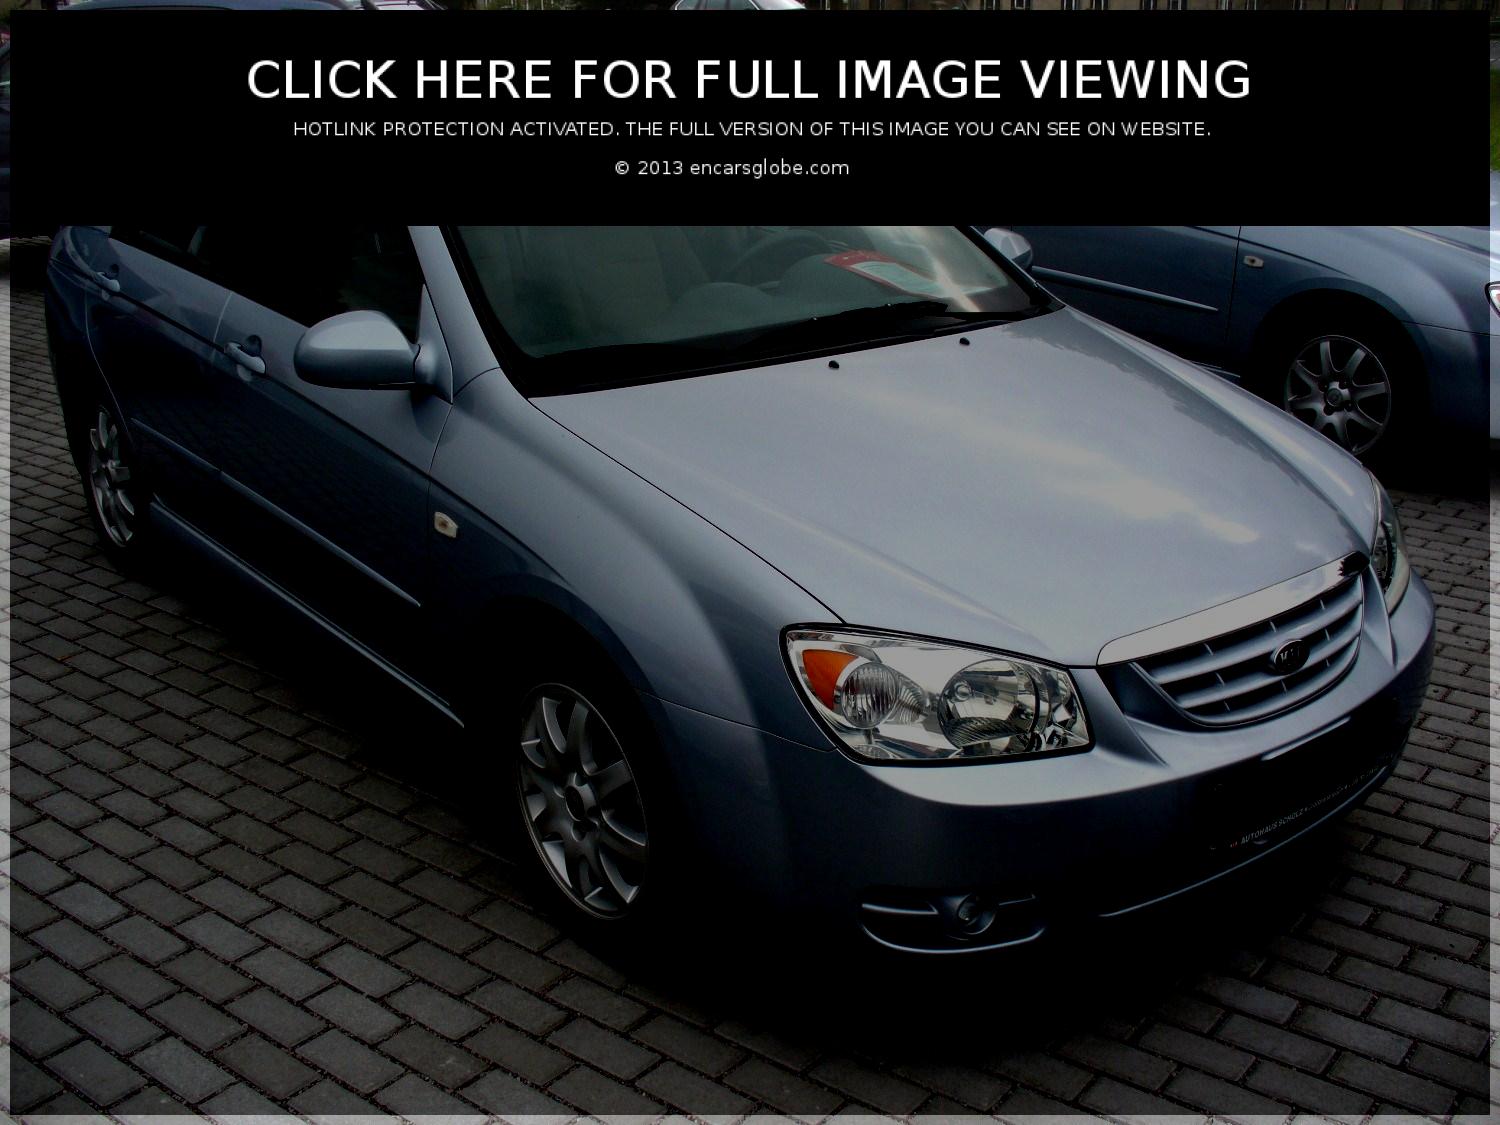 Kia Cerato LX Sedan Photo Gallery: Photo #01 out of 12, Image Size ...